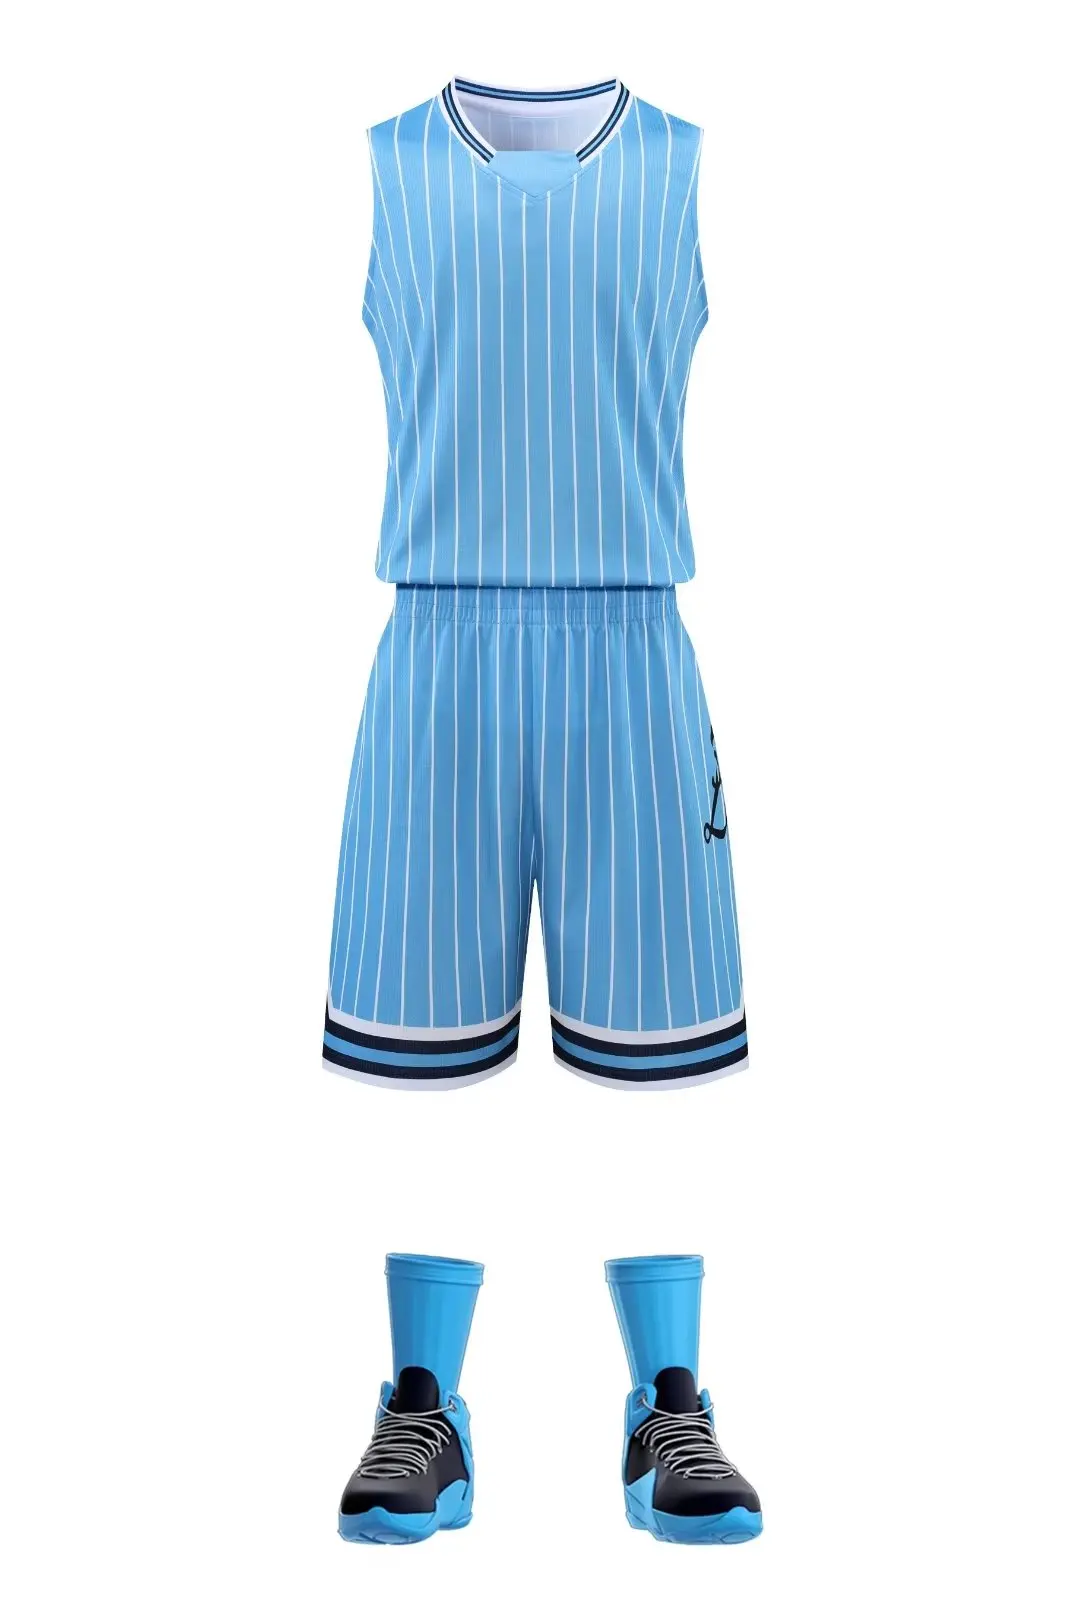 

Full Sublimation Hign Quality Men's Basketball Kits Jersey Set Team Club Basketball Wear Print Number Basketball Uniforms